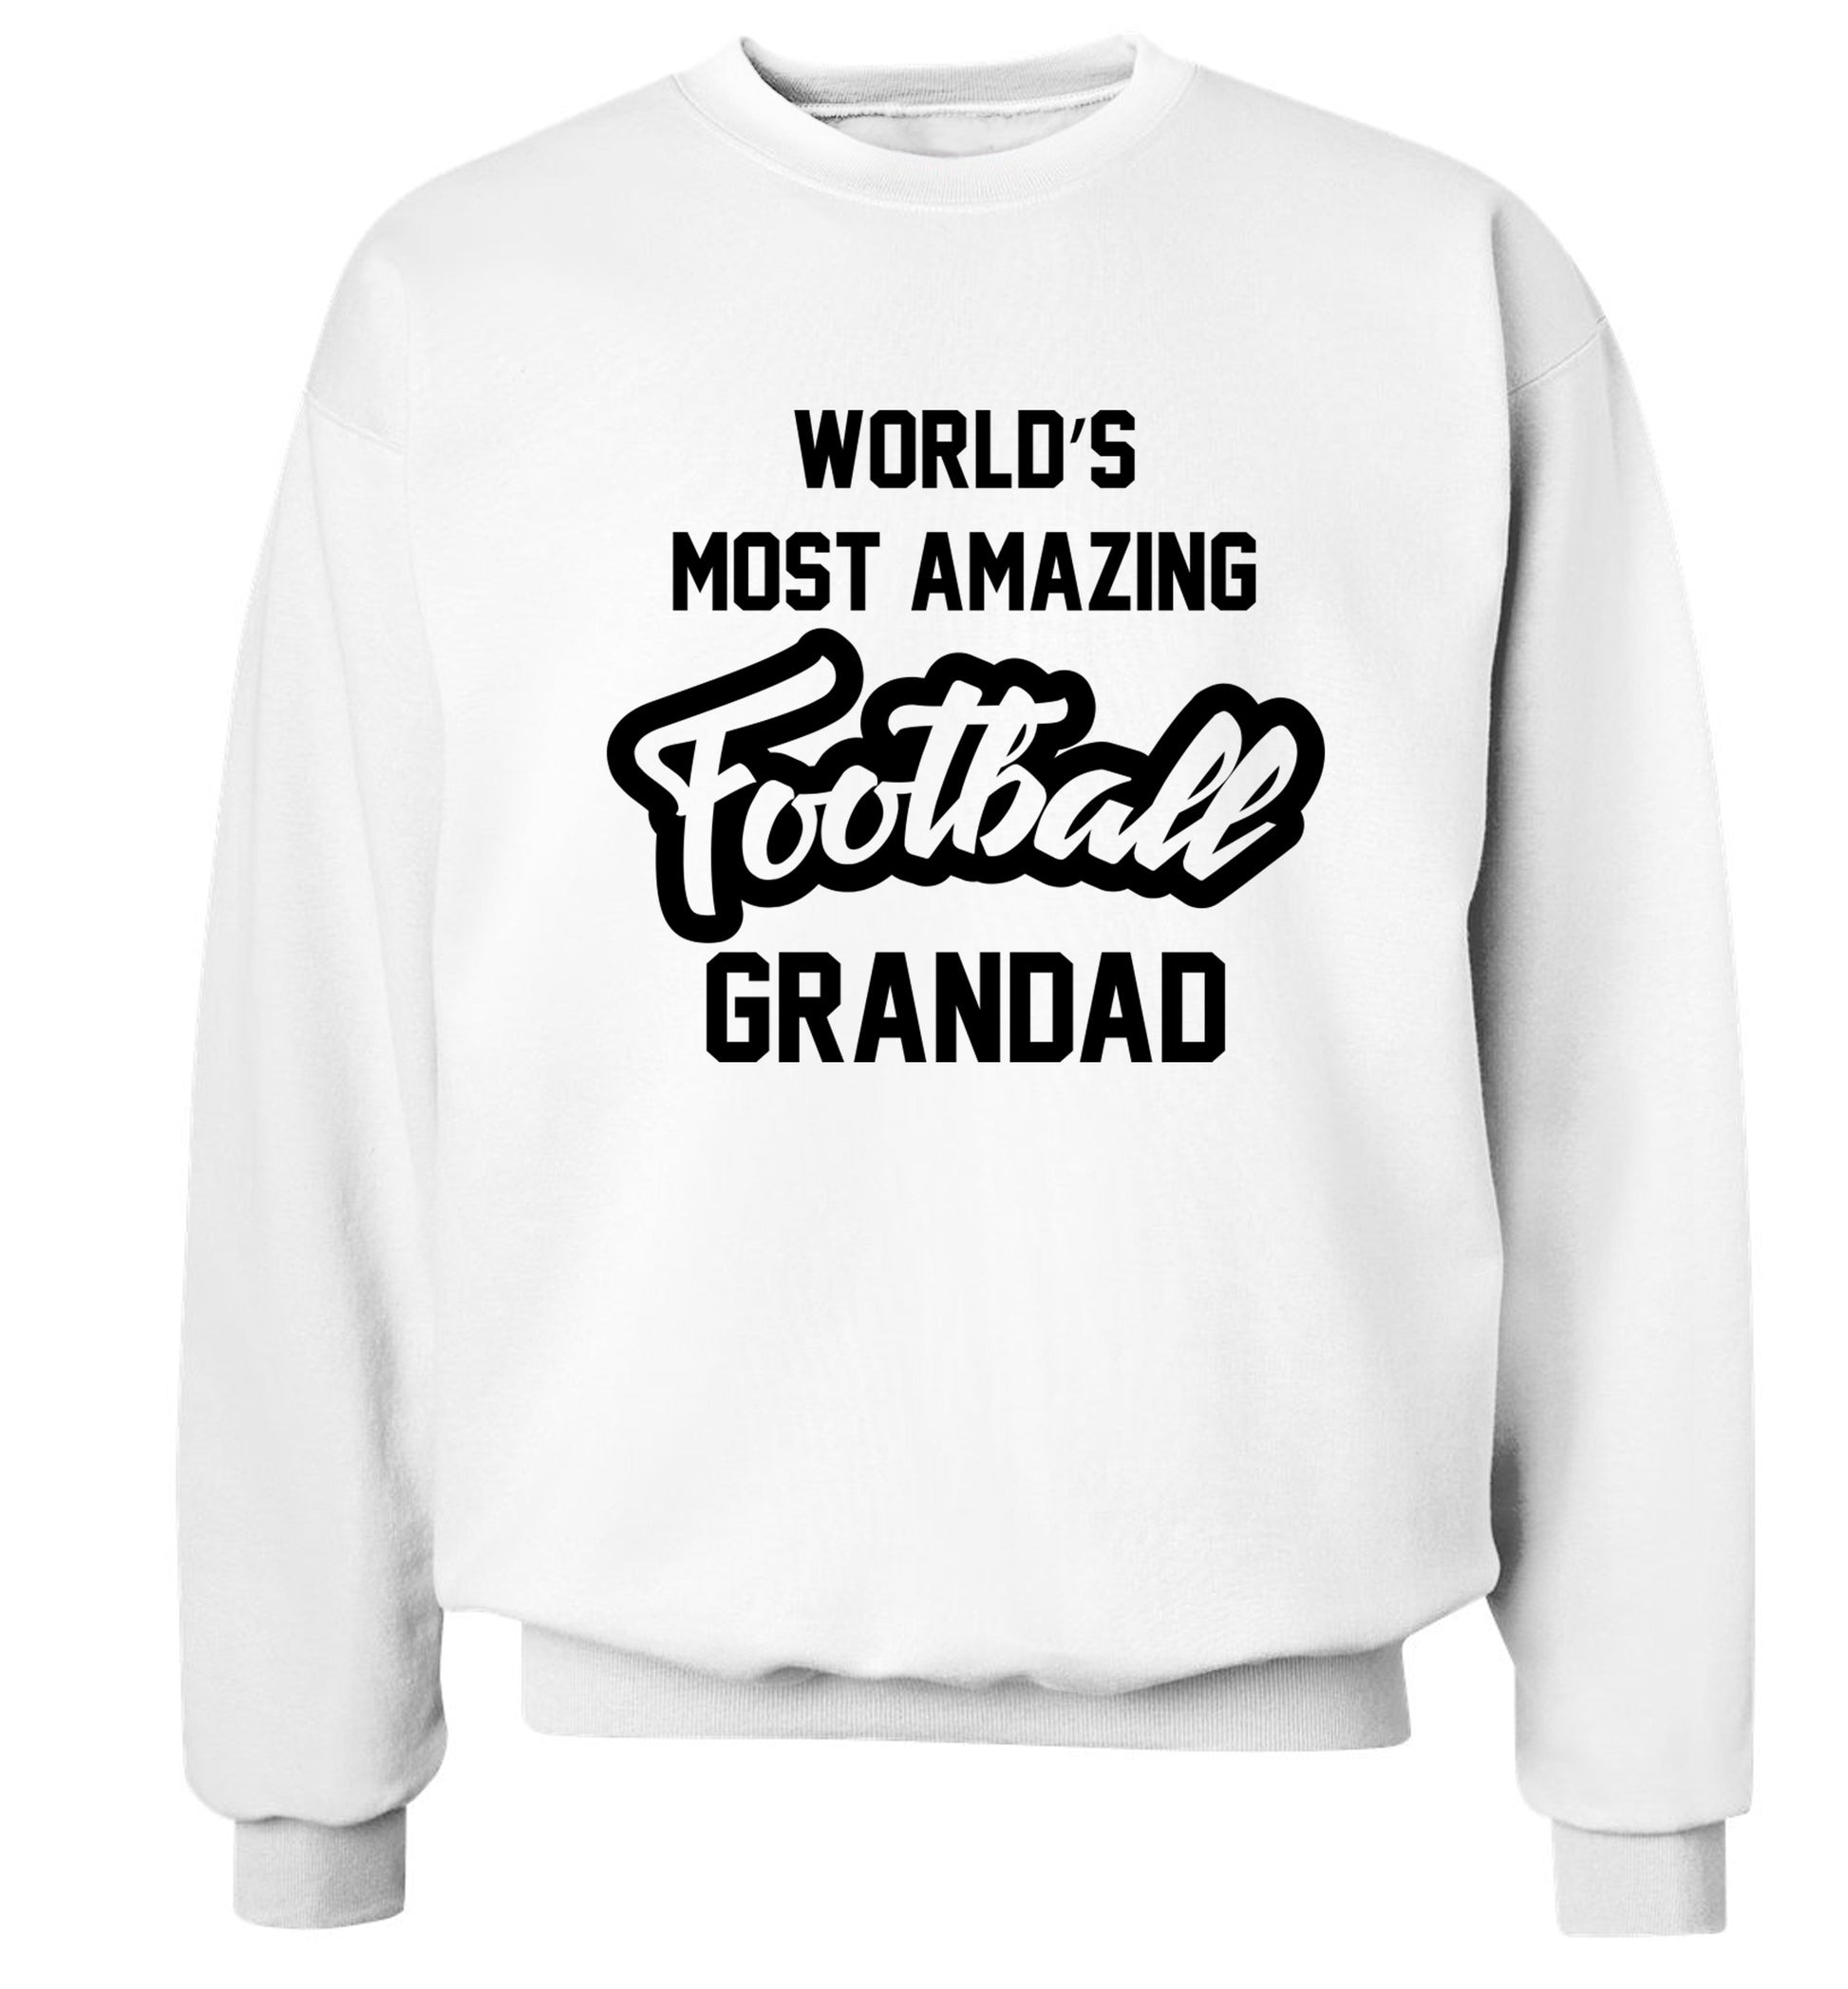 Worlds most amazing football grandad Adult's unisexwhite Sweater 2XL